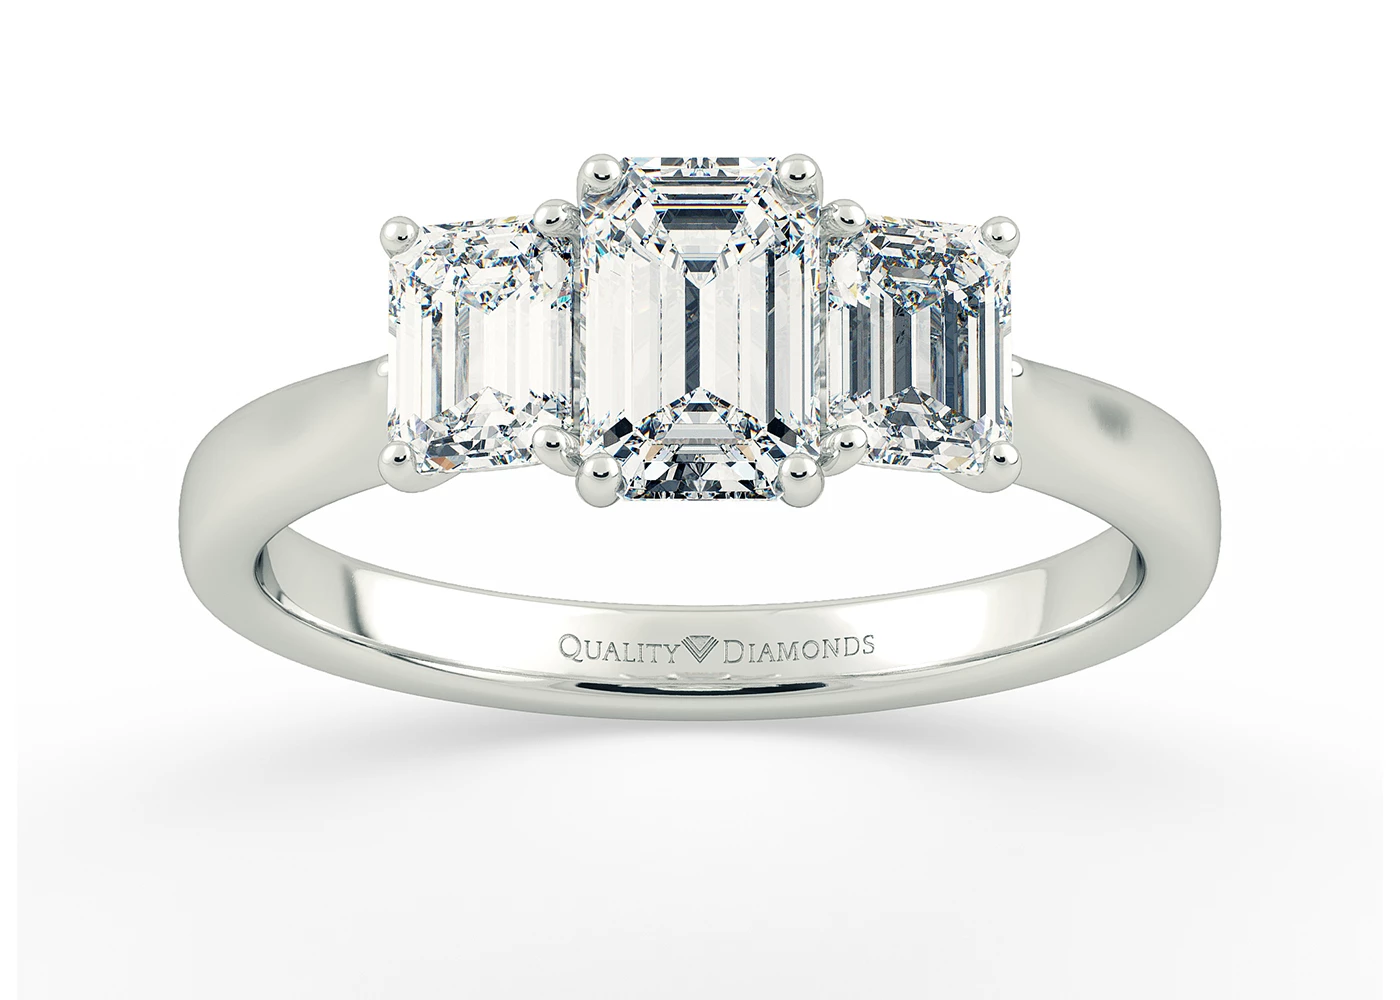 Emerald Trilogy Nayeli Diamond Ring in Platinum 950